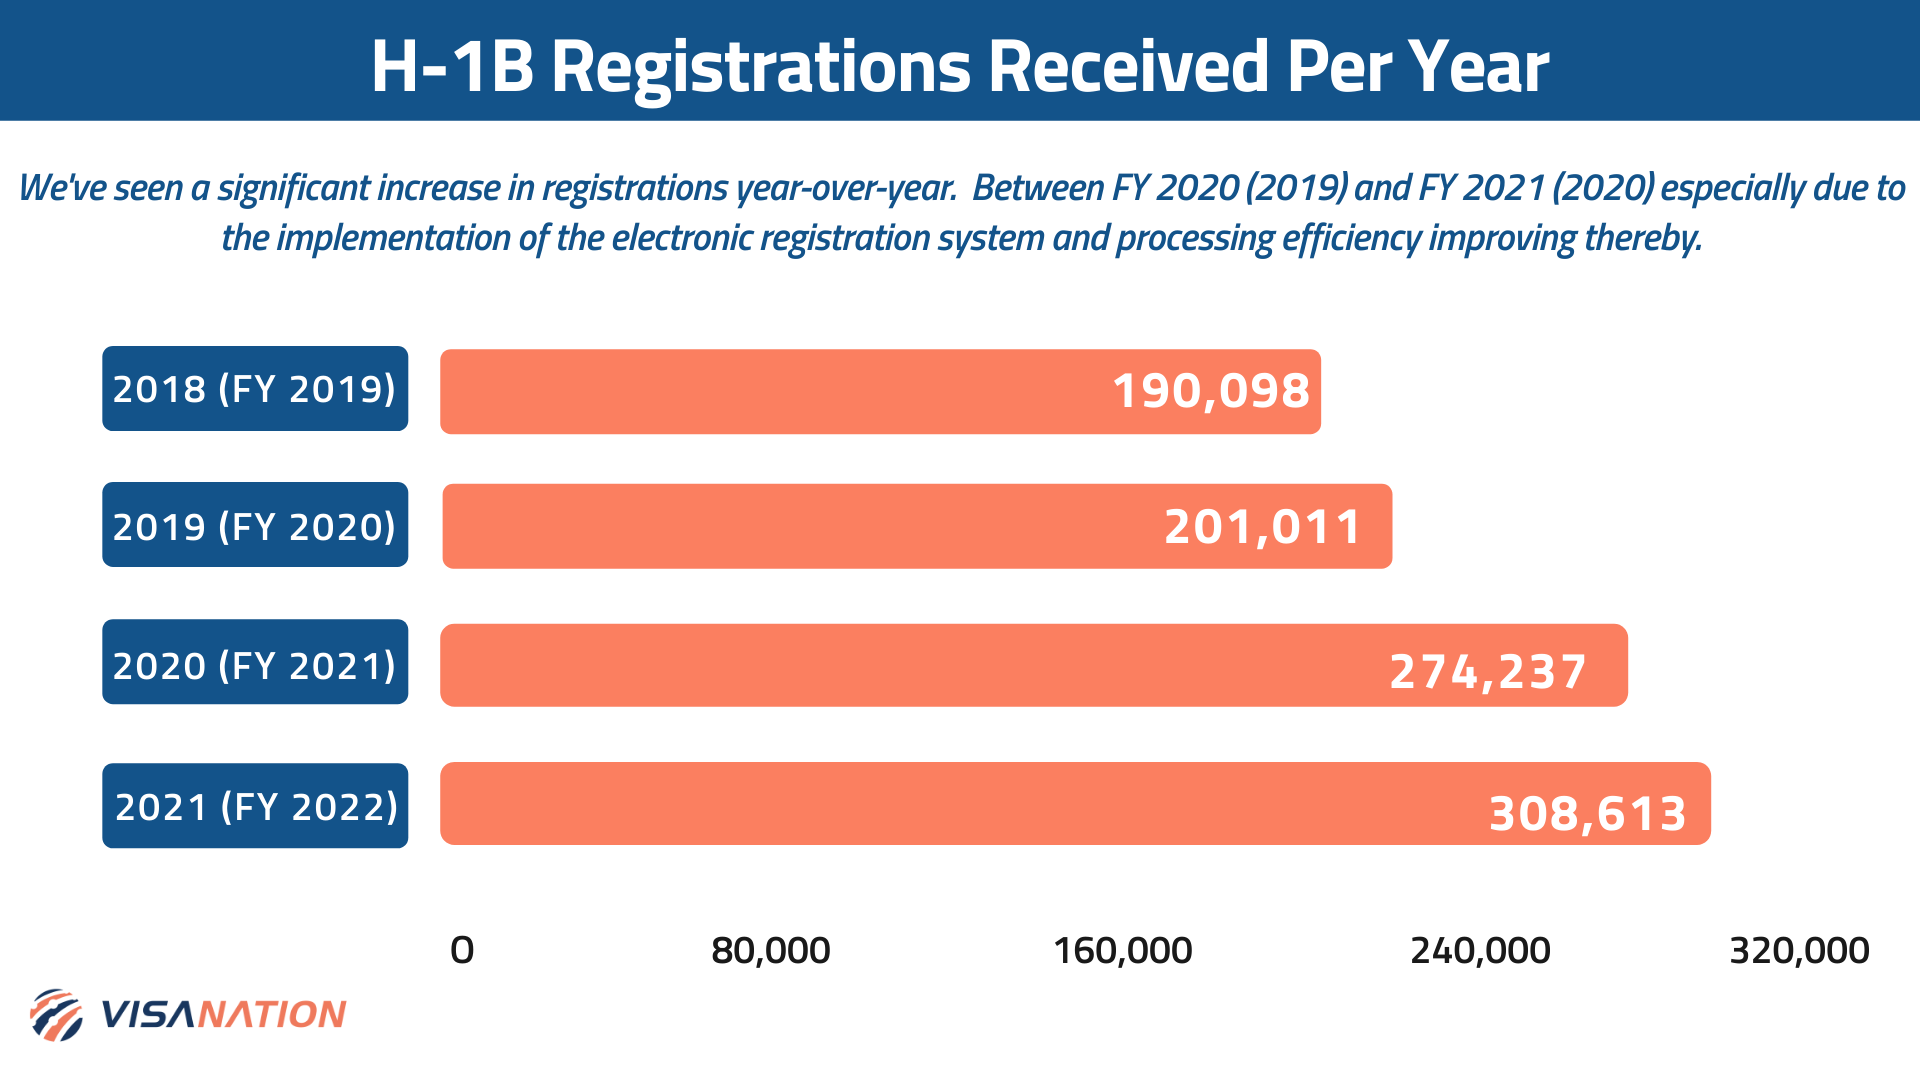 h-1b registrations year